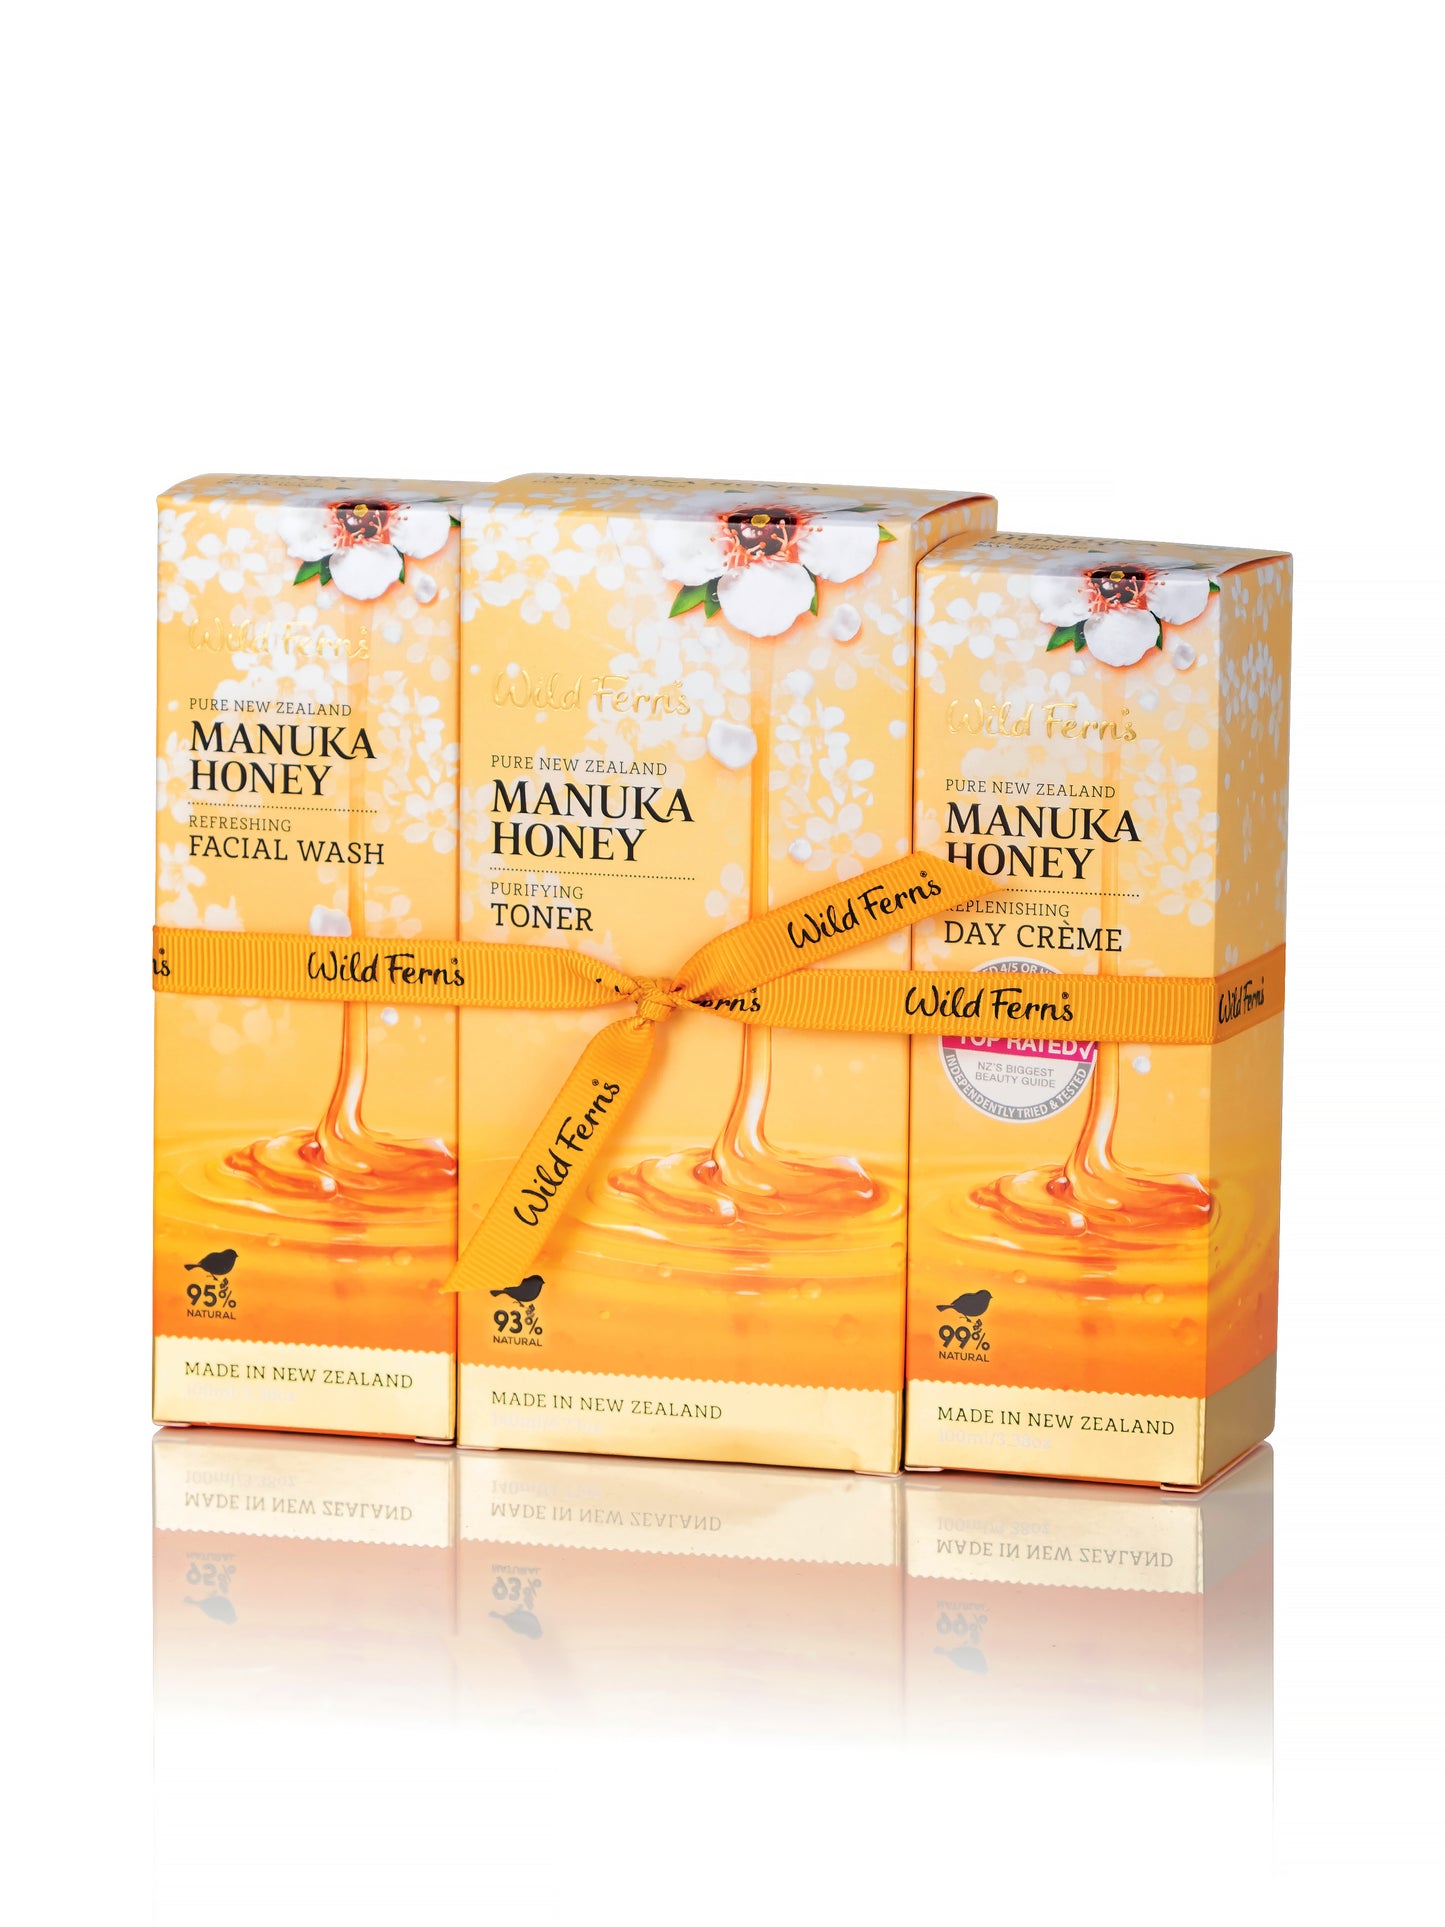 Manuka Honey Facial Set